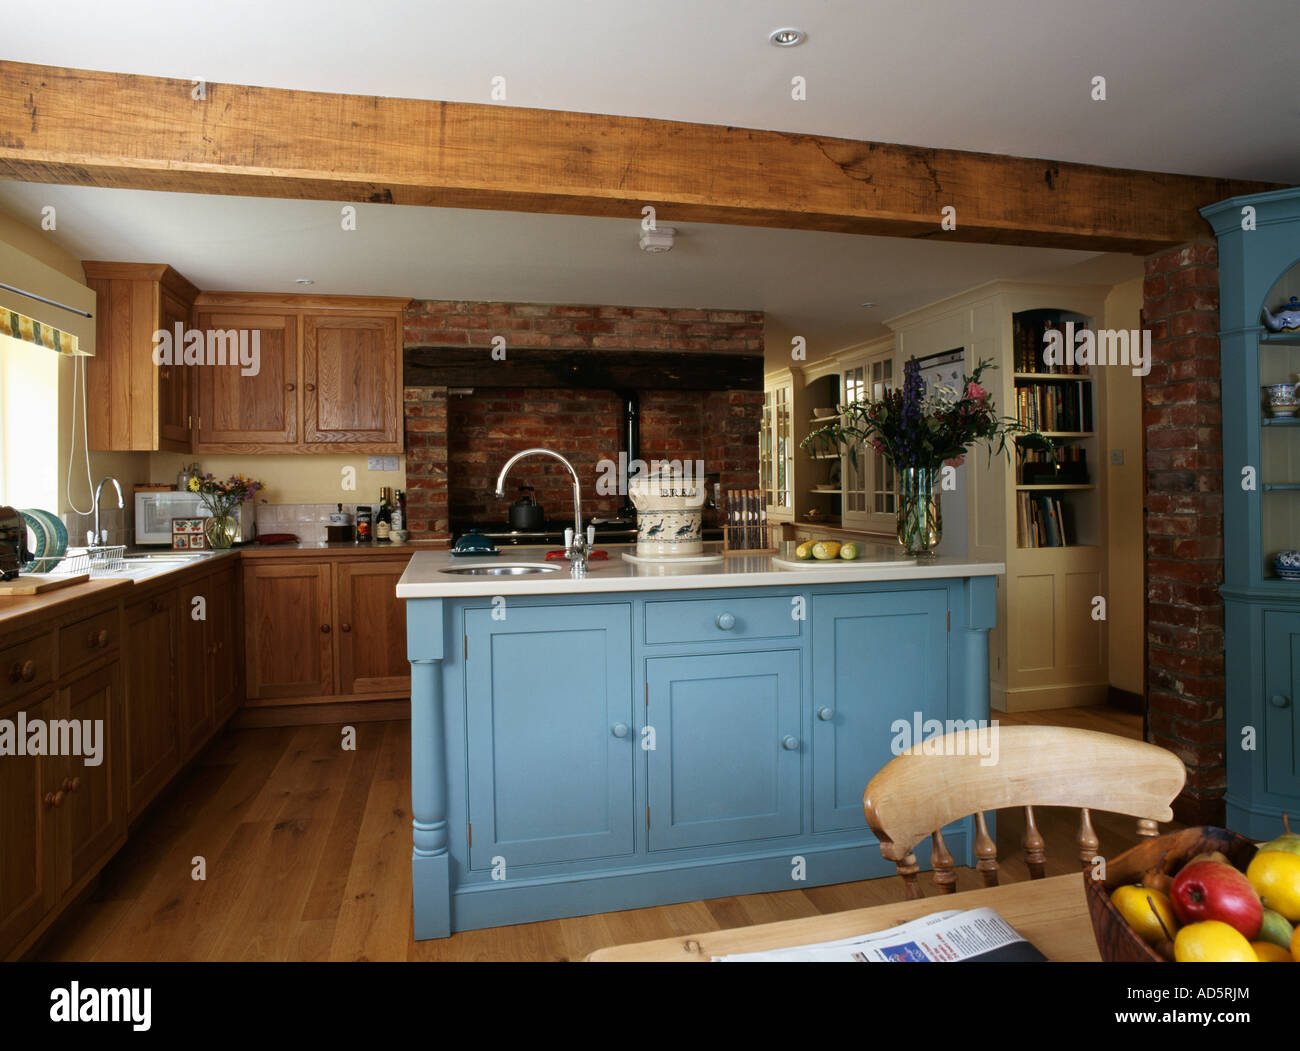 Oak Kitchen Island Unit Home Decorating Ideas Interior Design